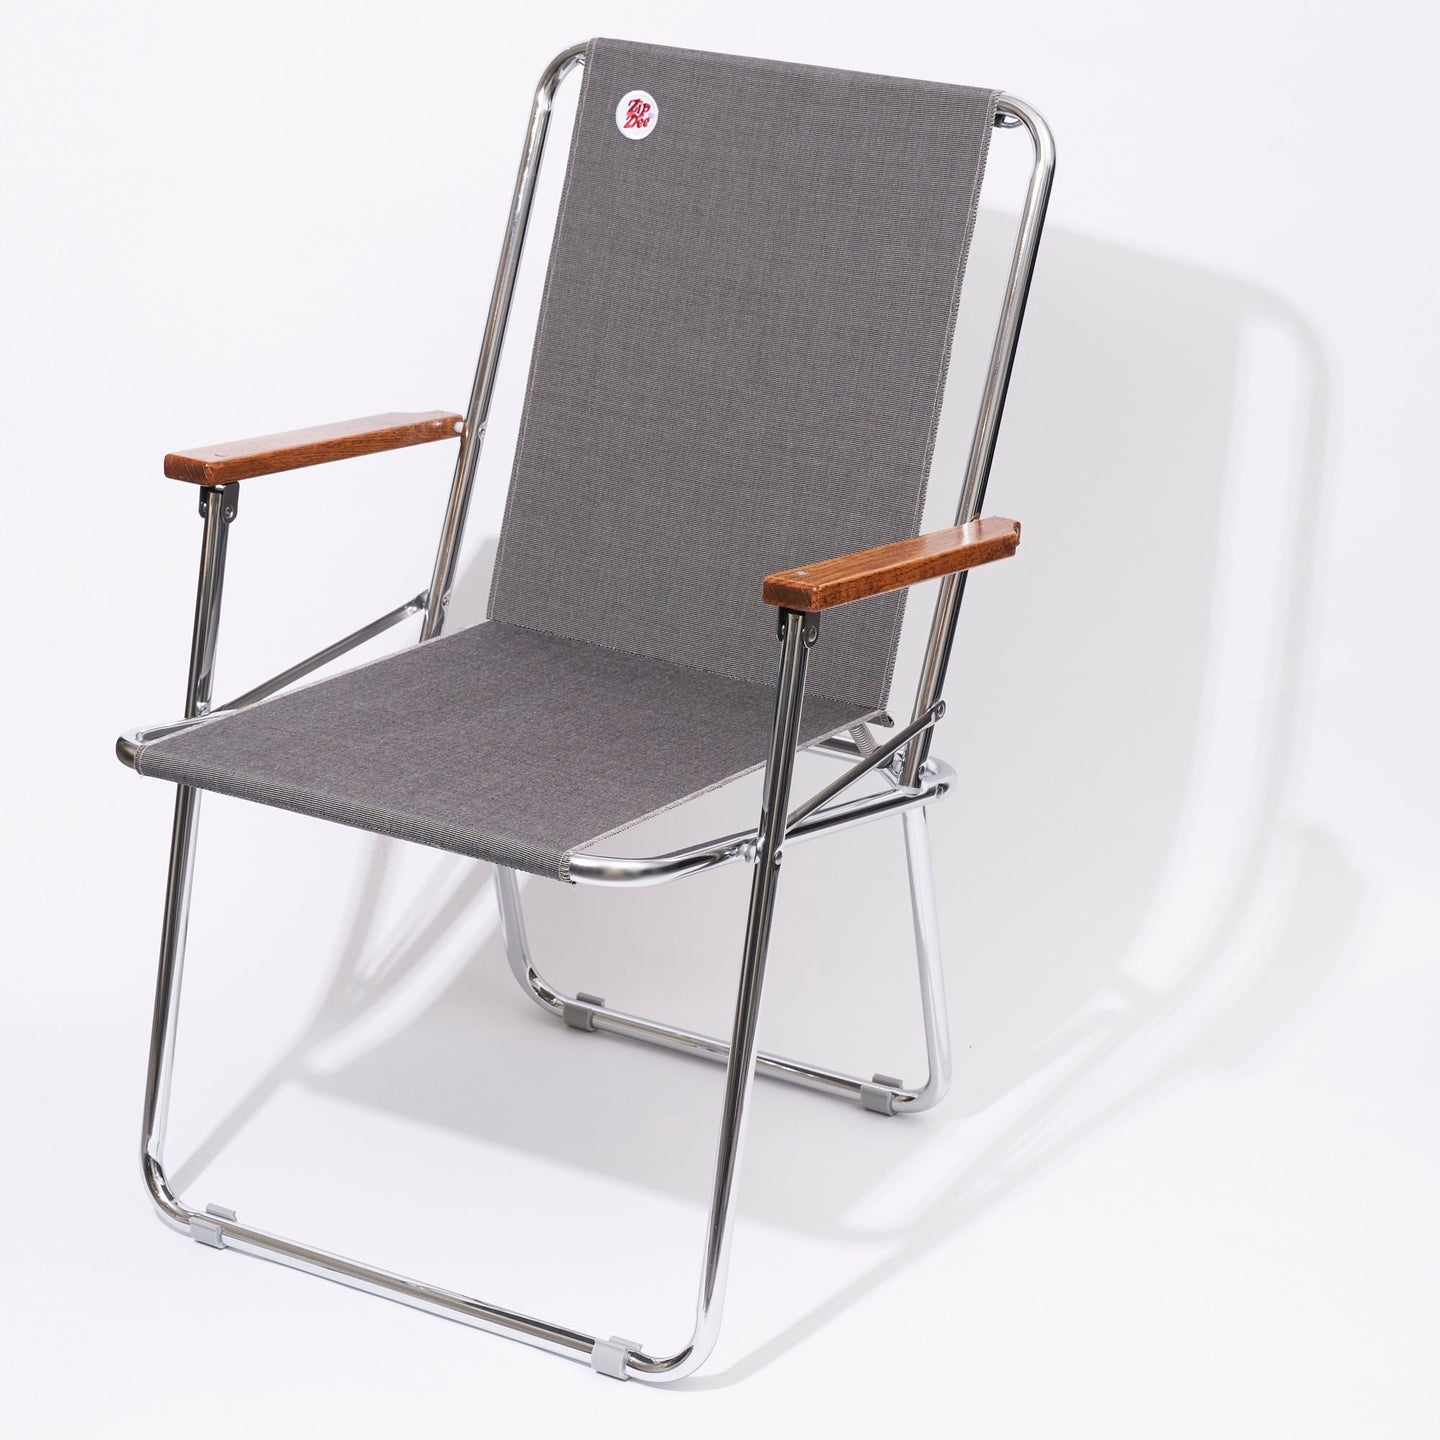 ZipDee CHAIR col. 4607 [Charcoal Tweed] - ZipDee Awning & Chair / Solo Star Japan Co.,Ltd.